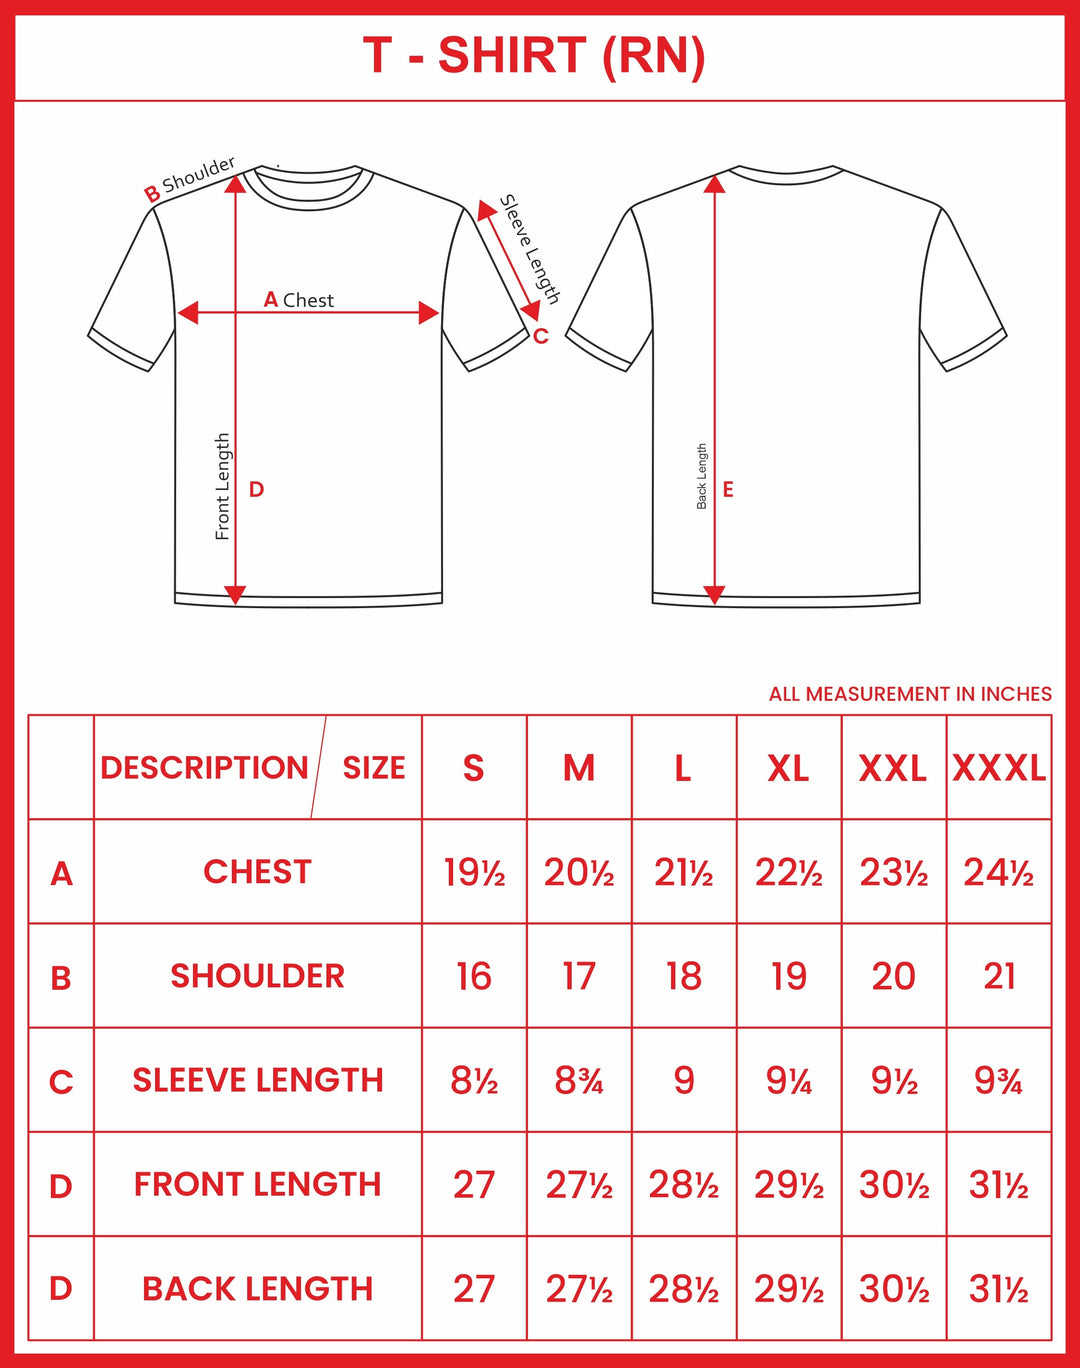 Round Neck - Navy Melange Solid T-Shirt For Men | Ariser